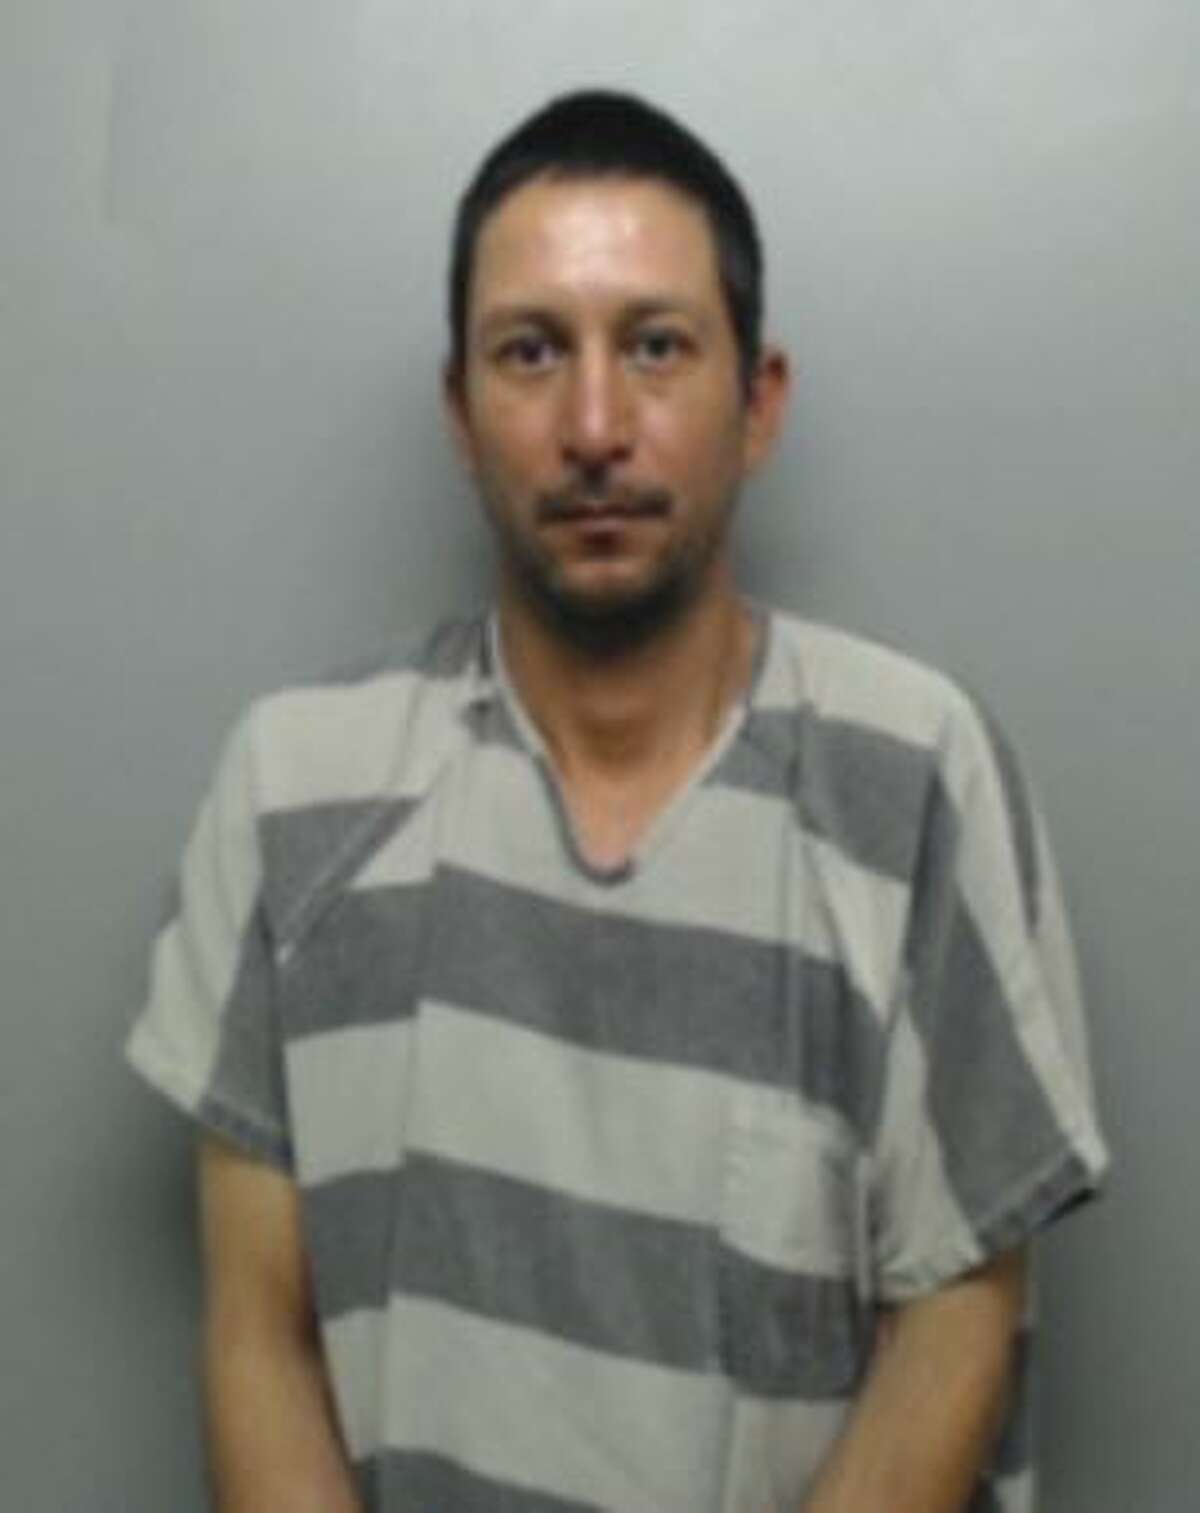 Authorities served an arrest warrant on Ricardo Jesus Cabello, 36, on Sunday.